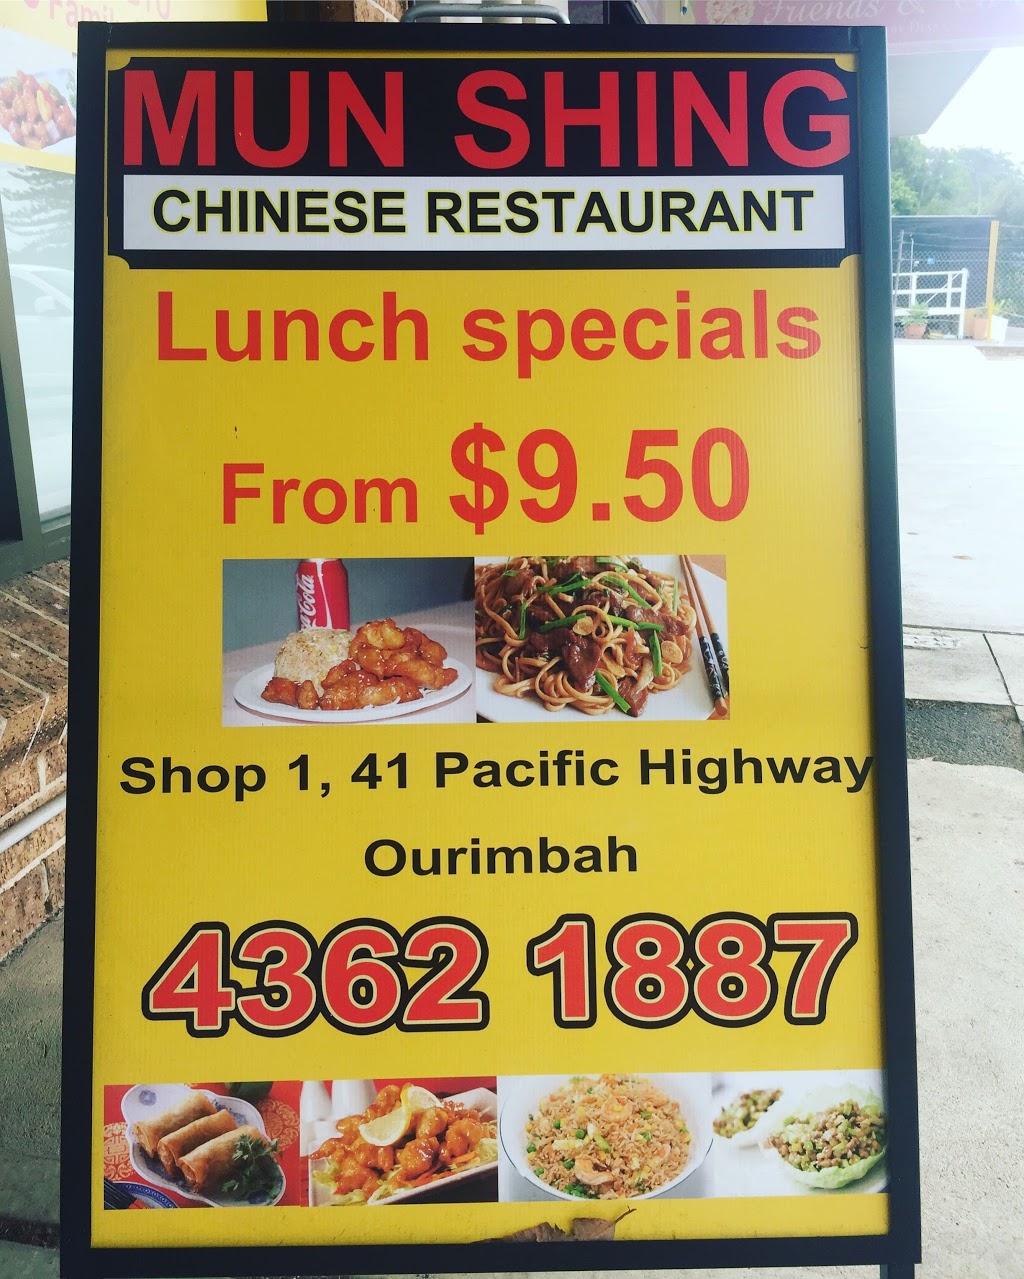 Mun Shing Chinese Restaurant | restaurant | 41 Pacific Hwy, Ourimbah NSW 2258, Australia | 0243621887 OR +61 2 4362 1887